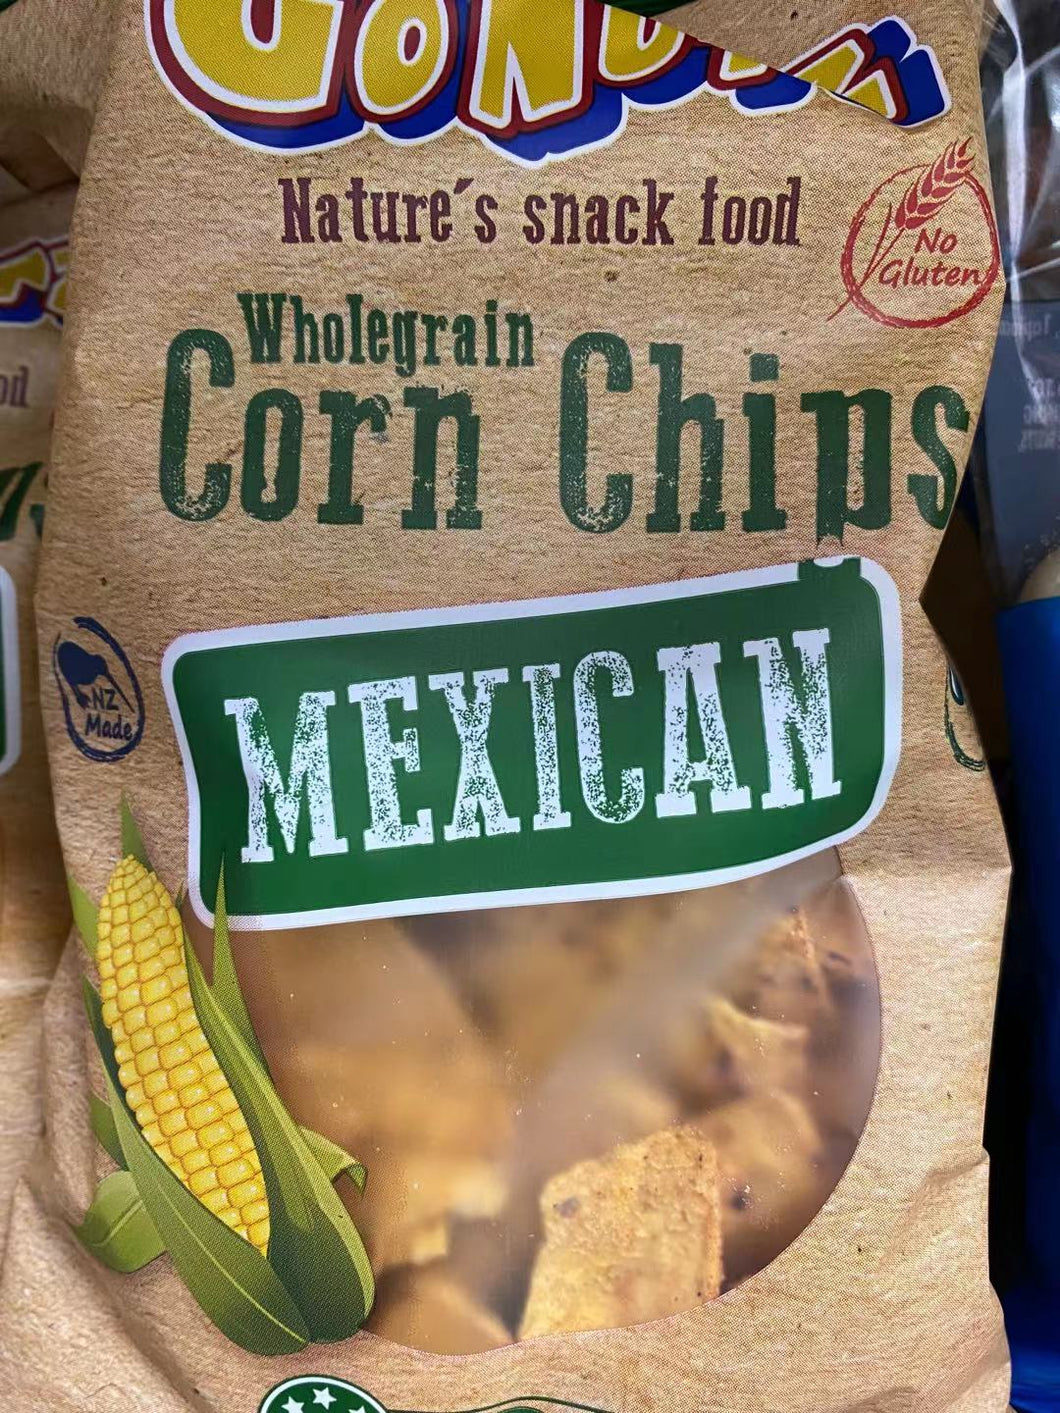 Gonutz Corn Chips